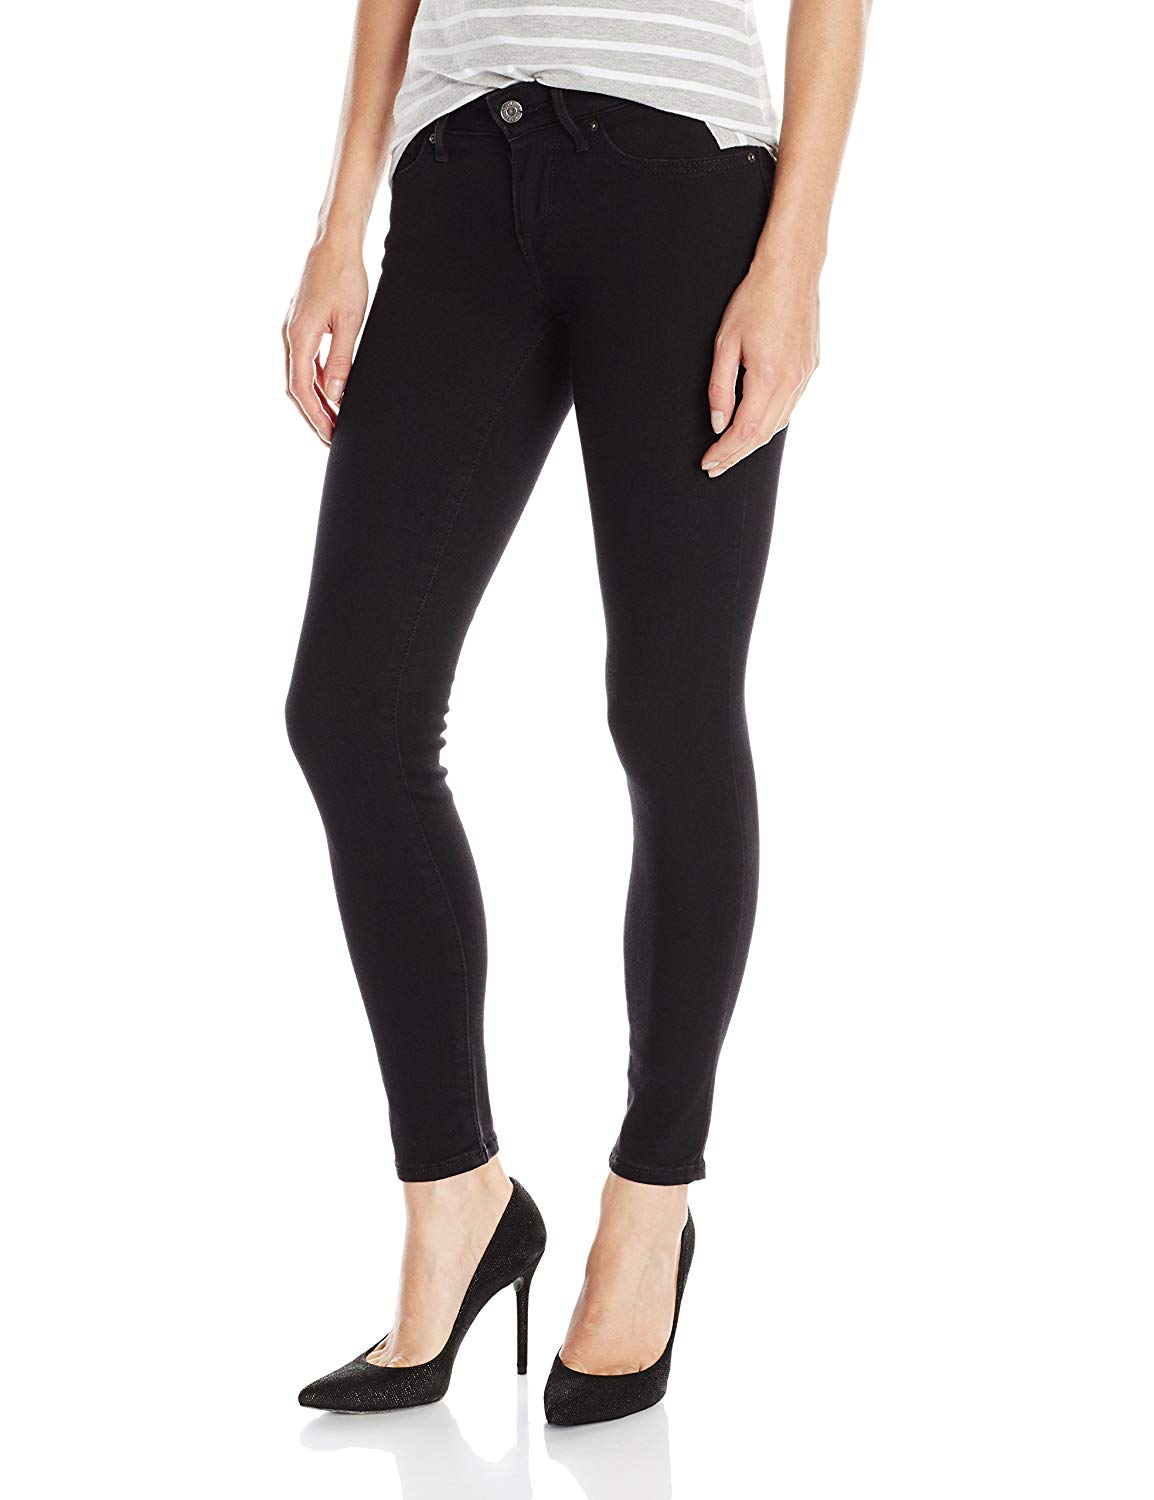 Levi's Women's 711 Skinny Jeans,Soft Black,27Wx30L, Soft Black, Size 27 ...